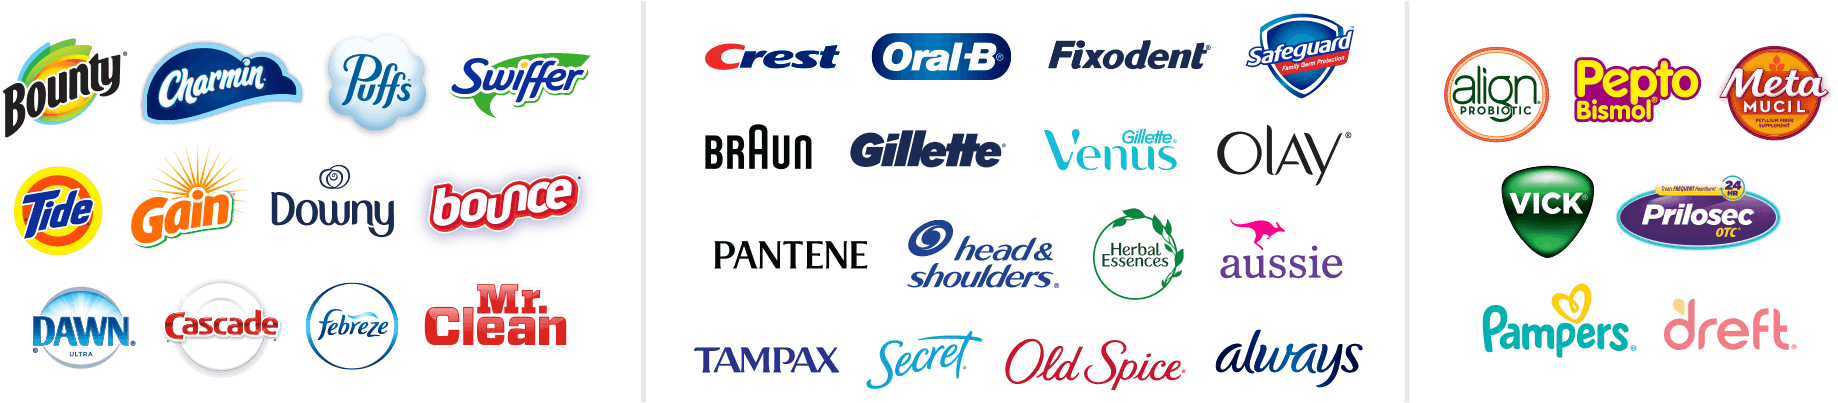 Brand logo train desktop